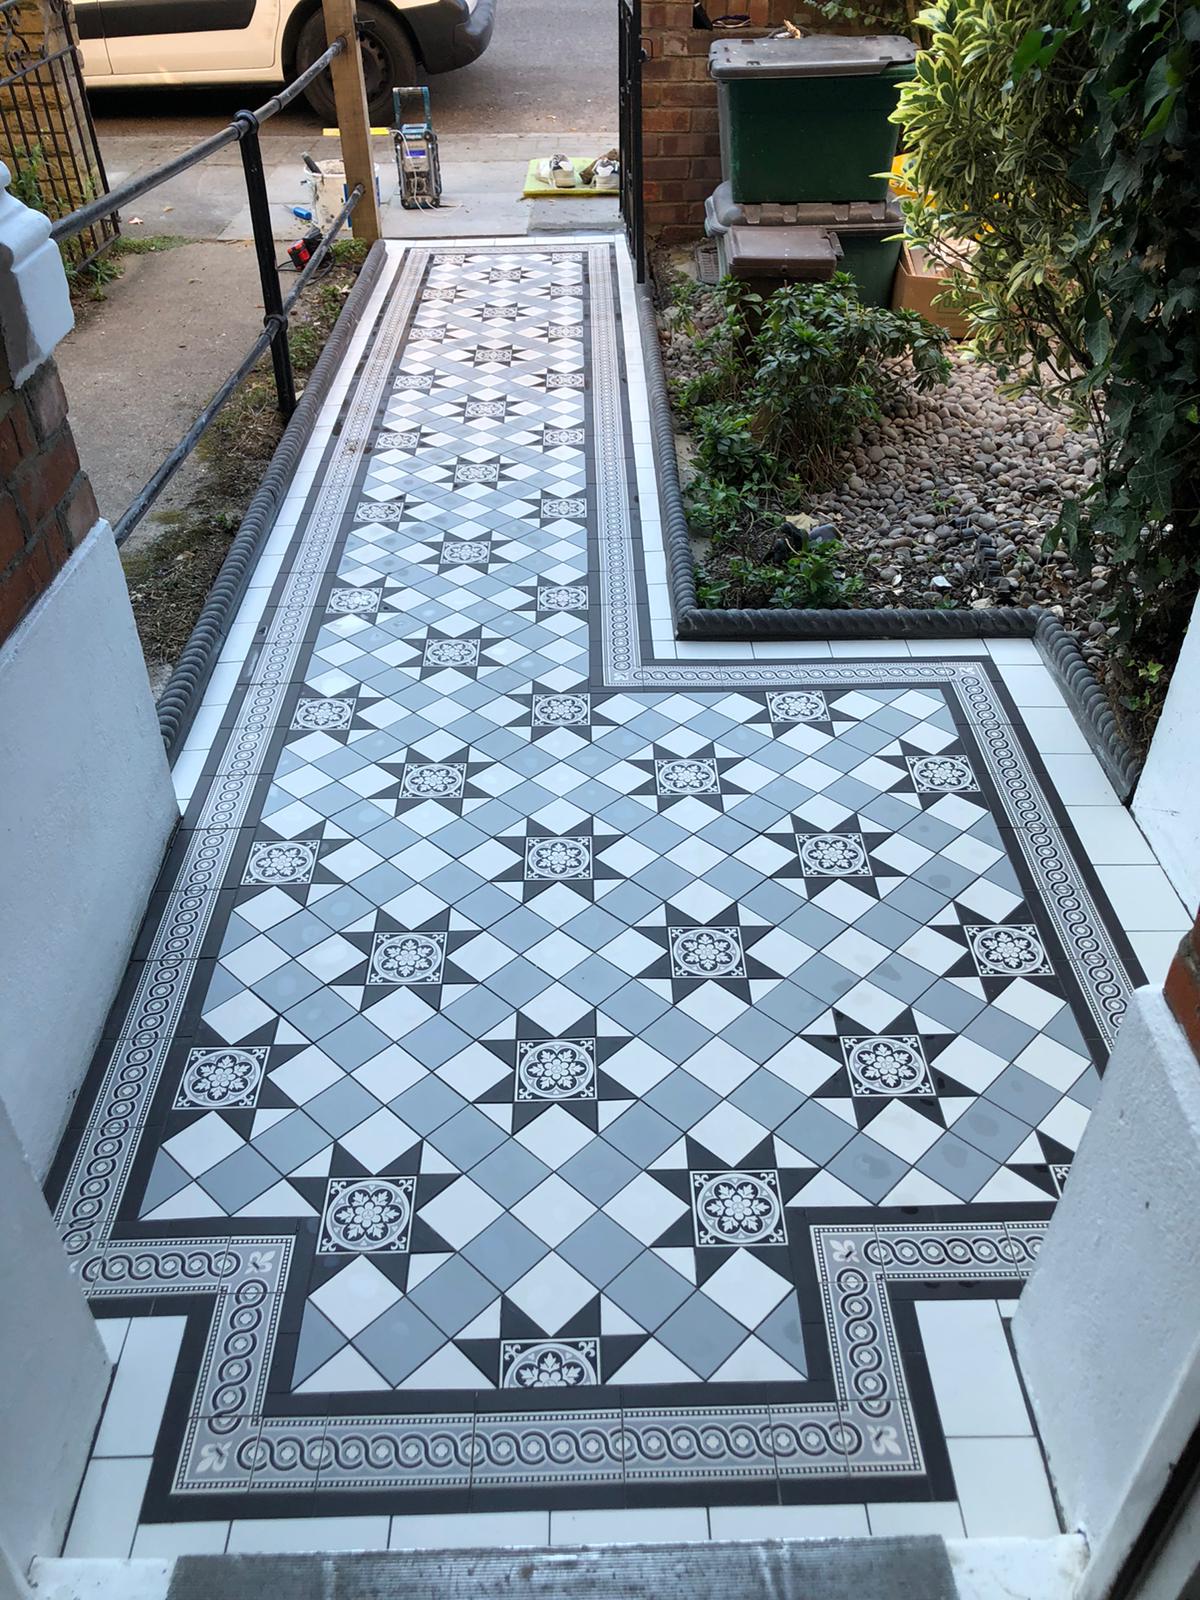 Reproduction Tiling | New Victorian Floor Tiles Broxbourne, Hertfordshire